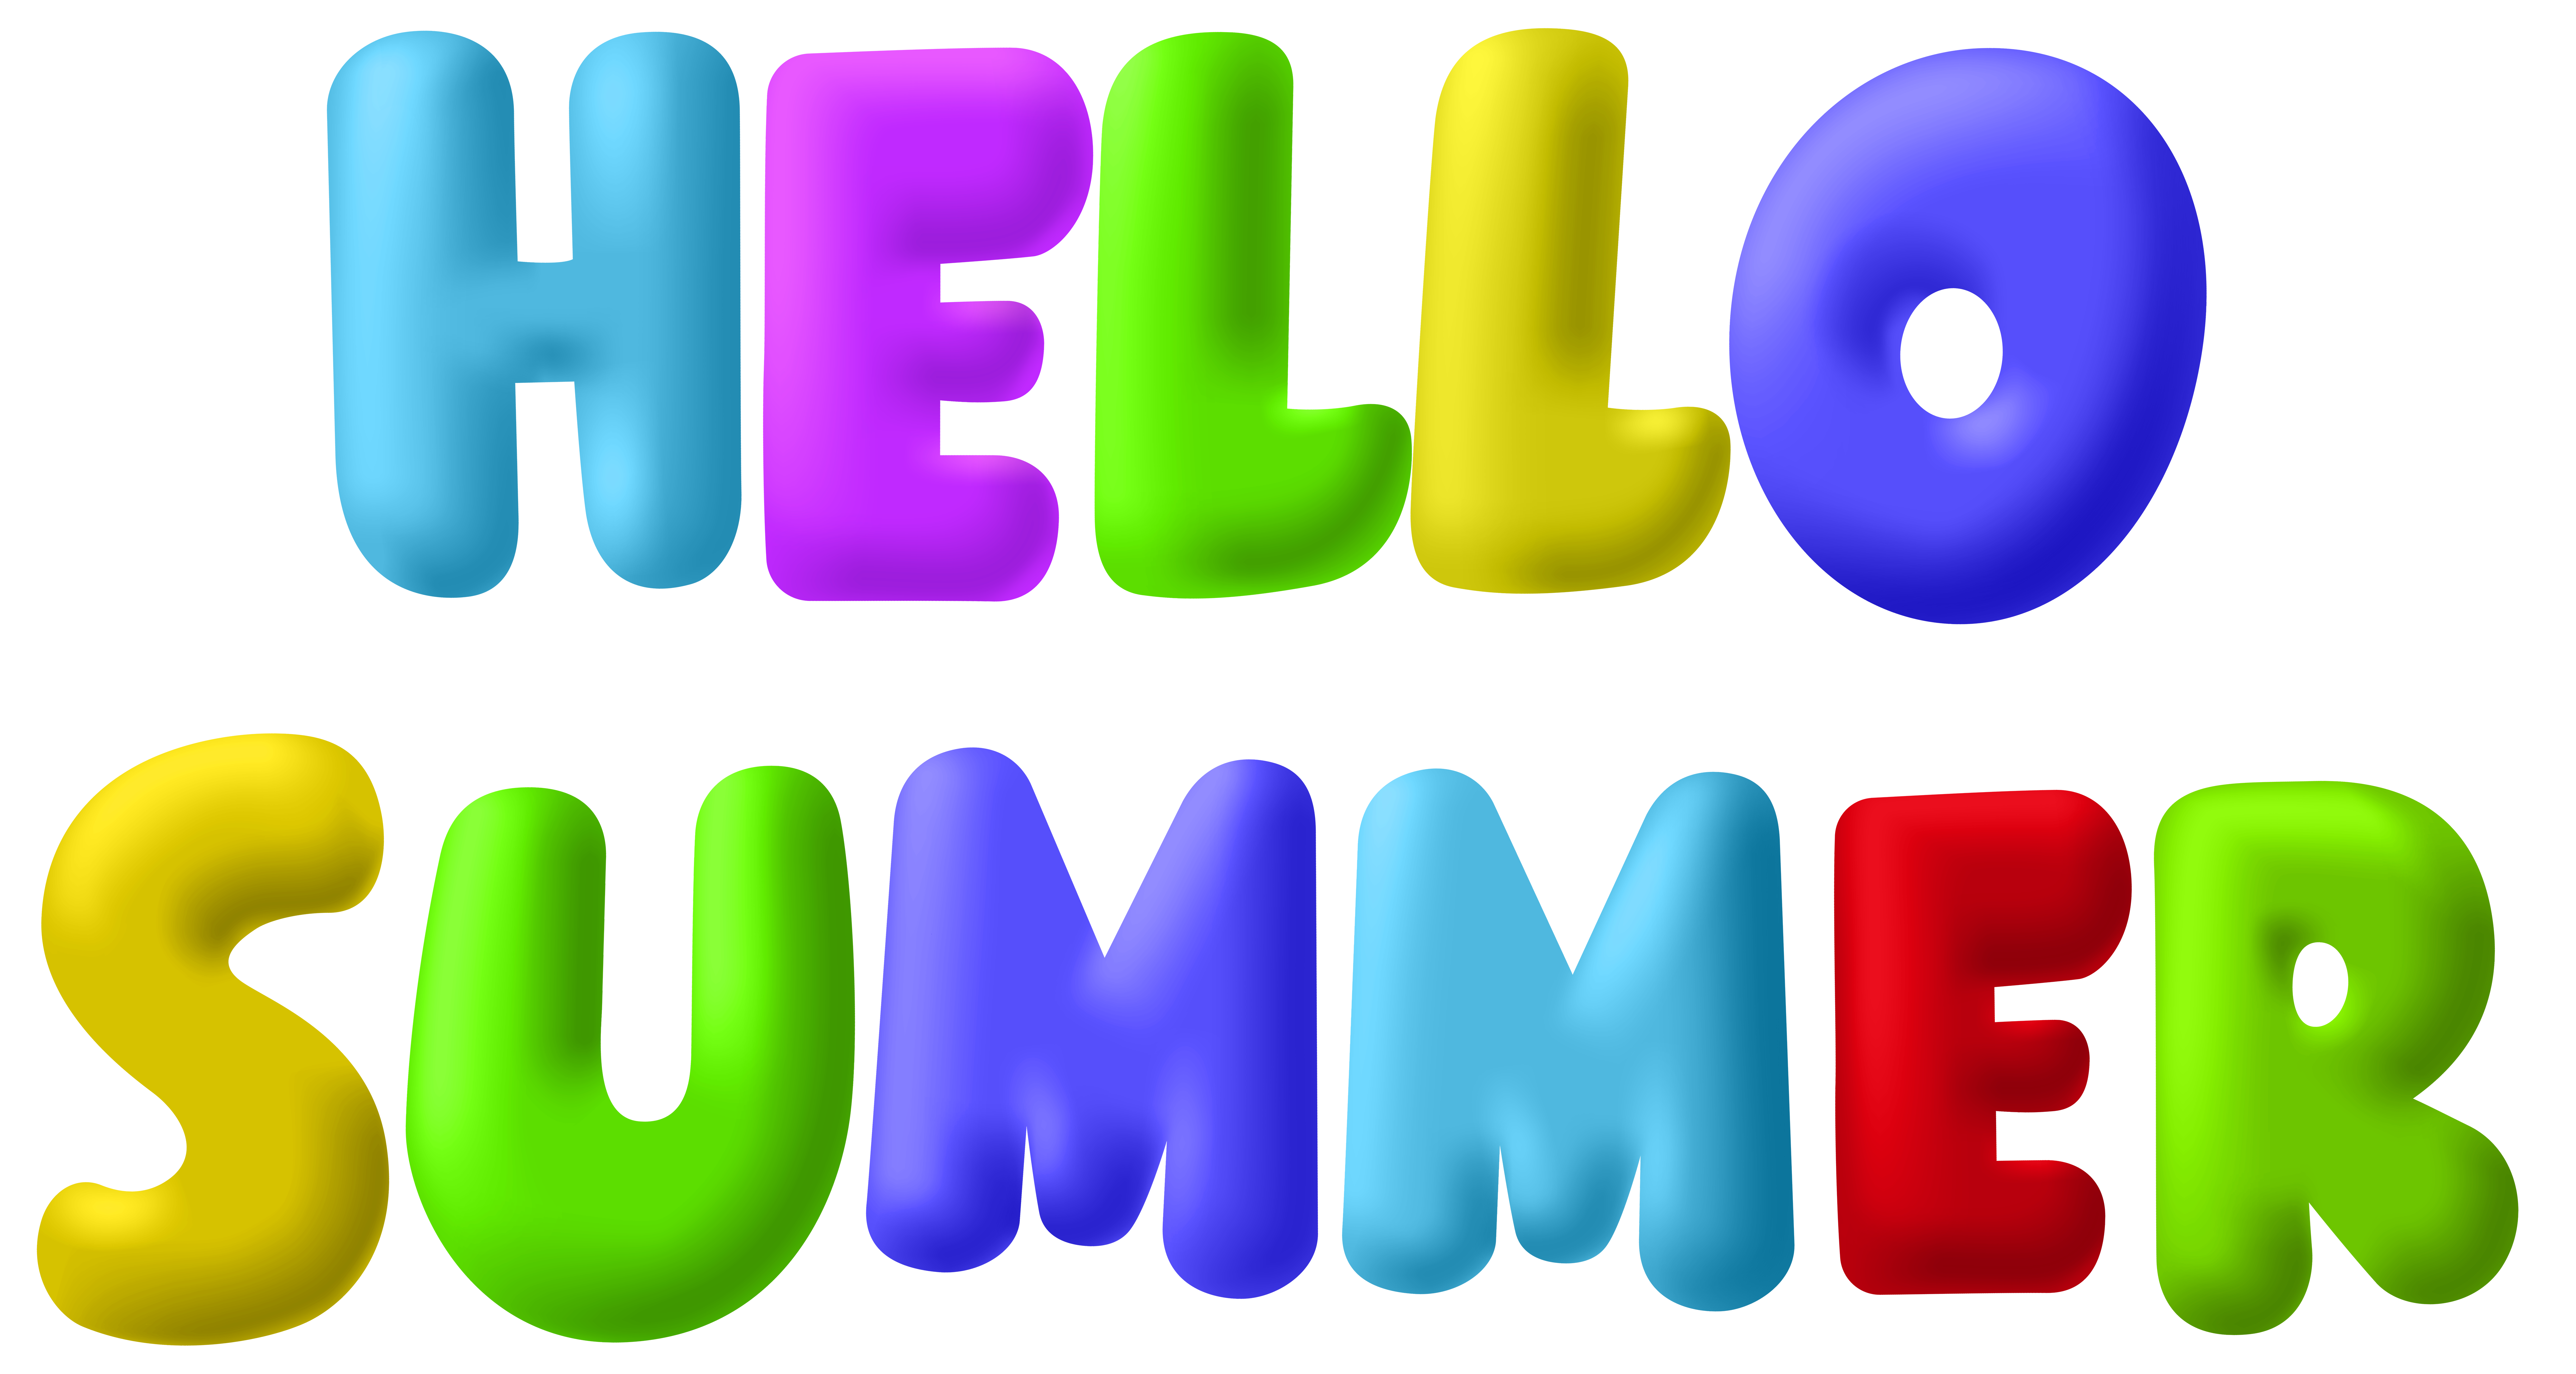 Hello Summer Png Free Logo Image